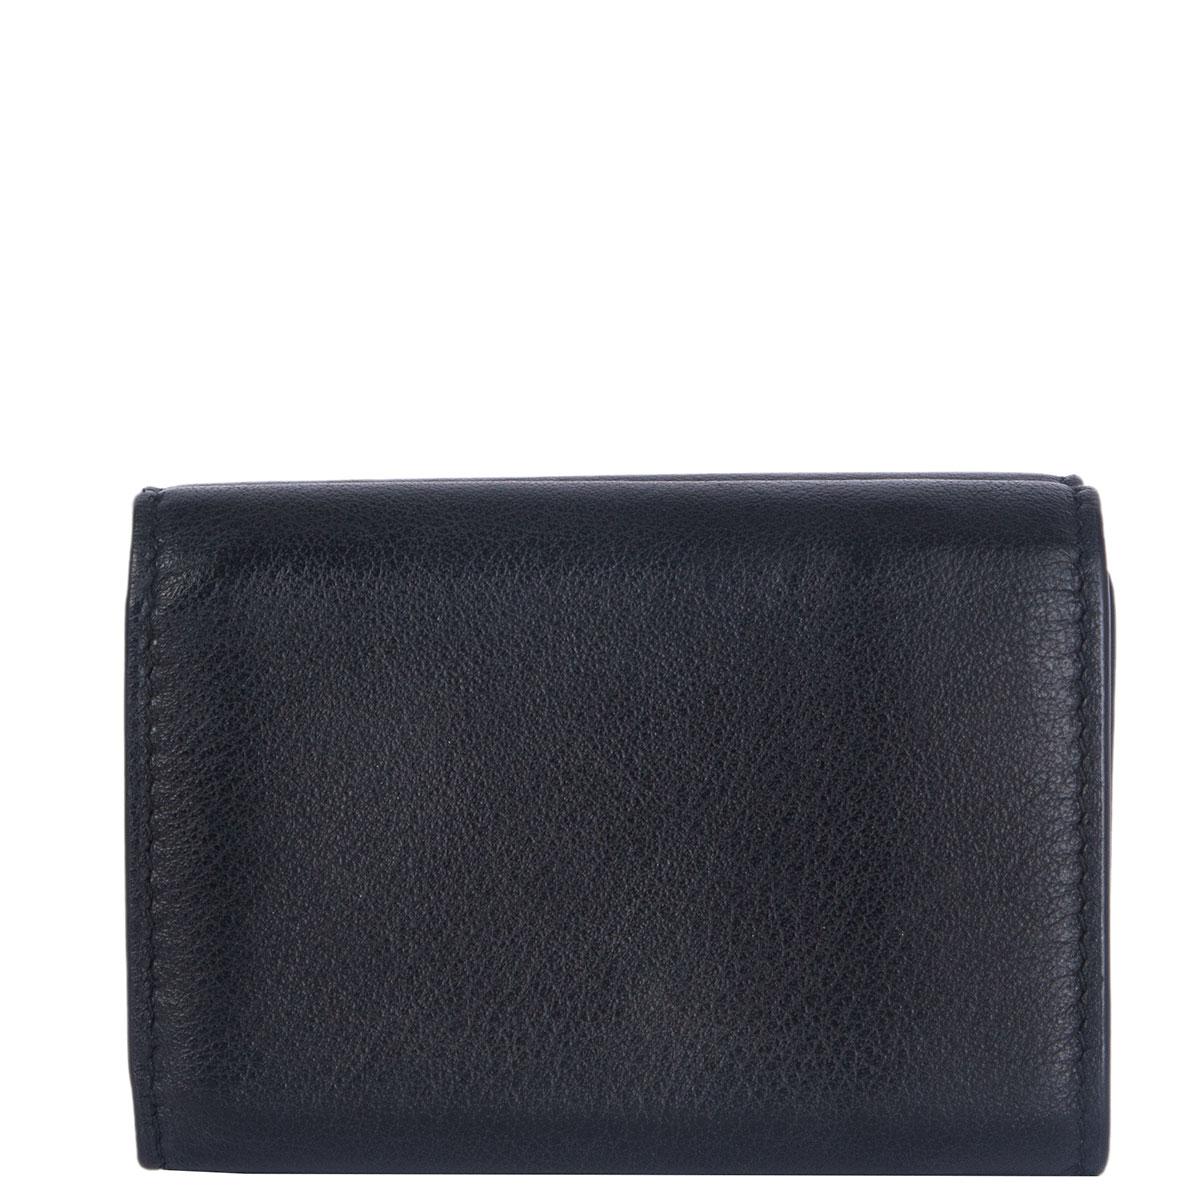 Black BALENCIAGA black leather CASH MINI Wallet